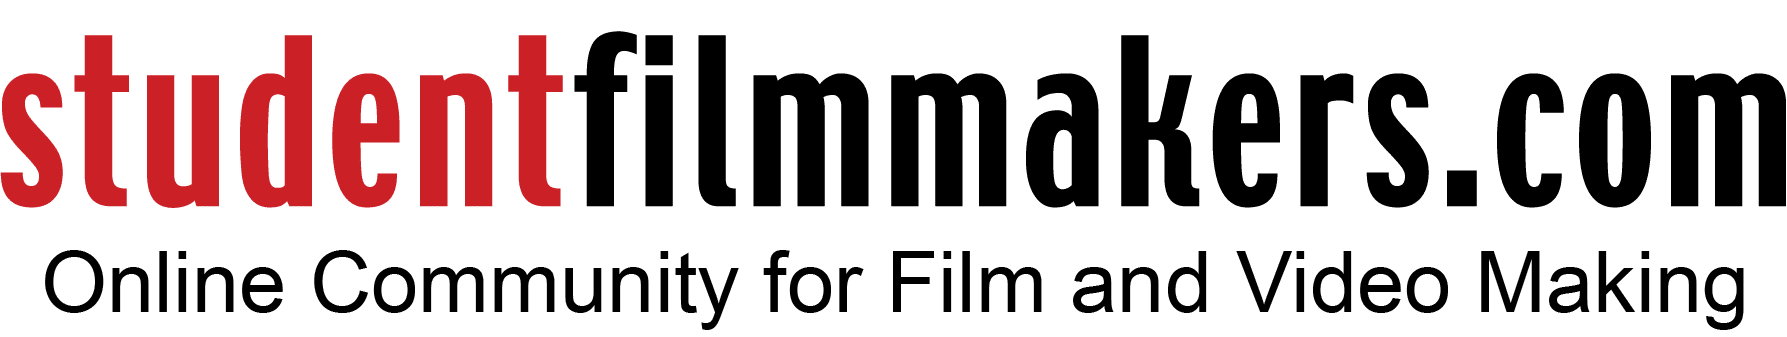 Student Filmmakers Announces RigWheels' Kraken